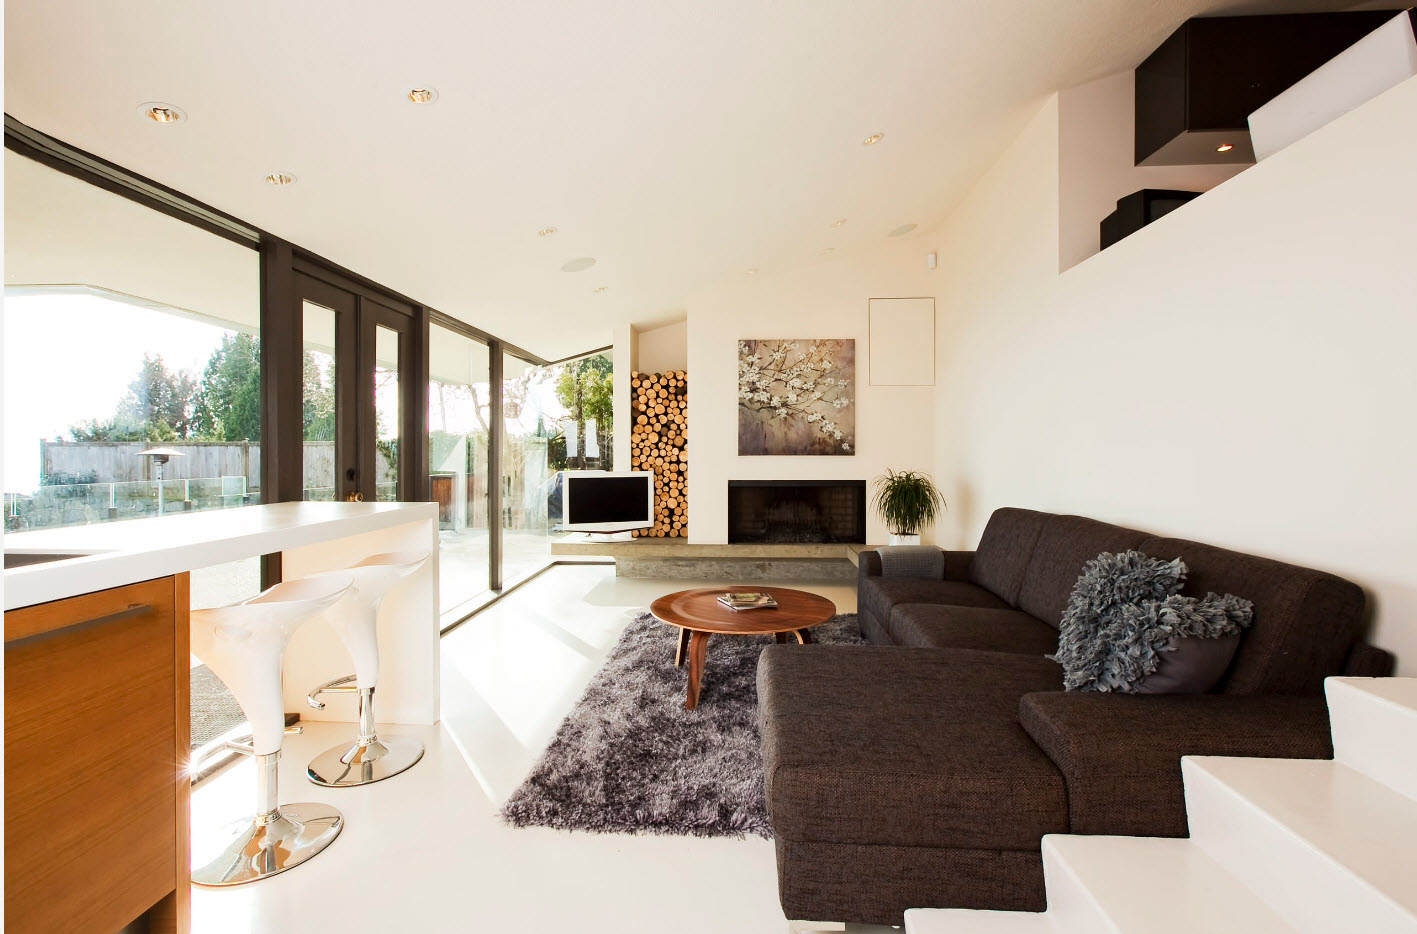 Sala de estar com caráter minimalista